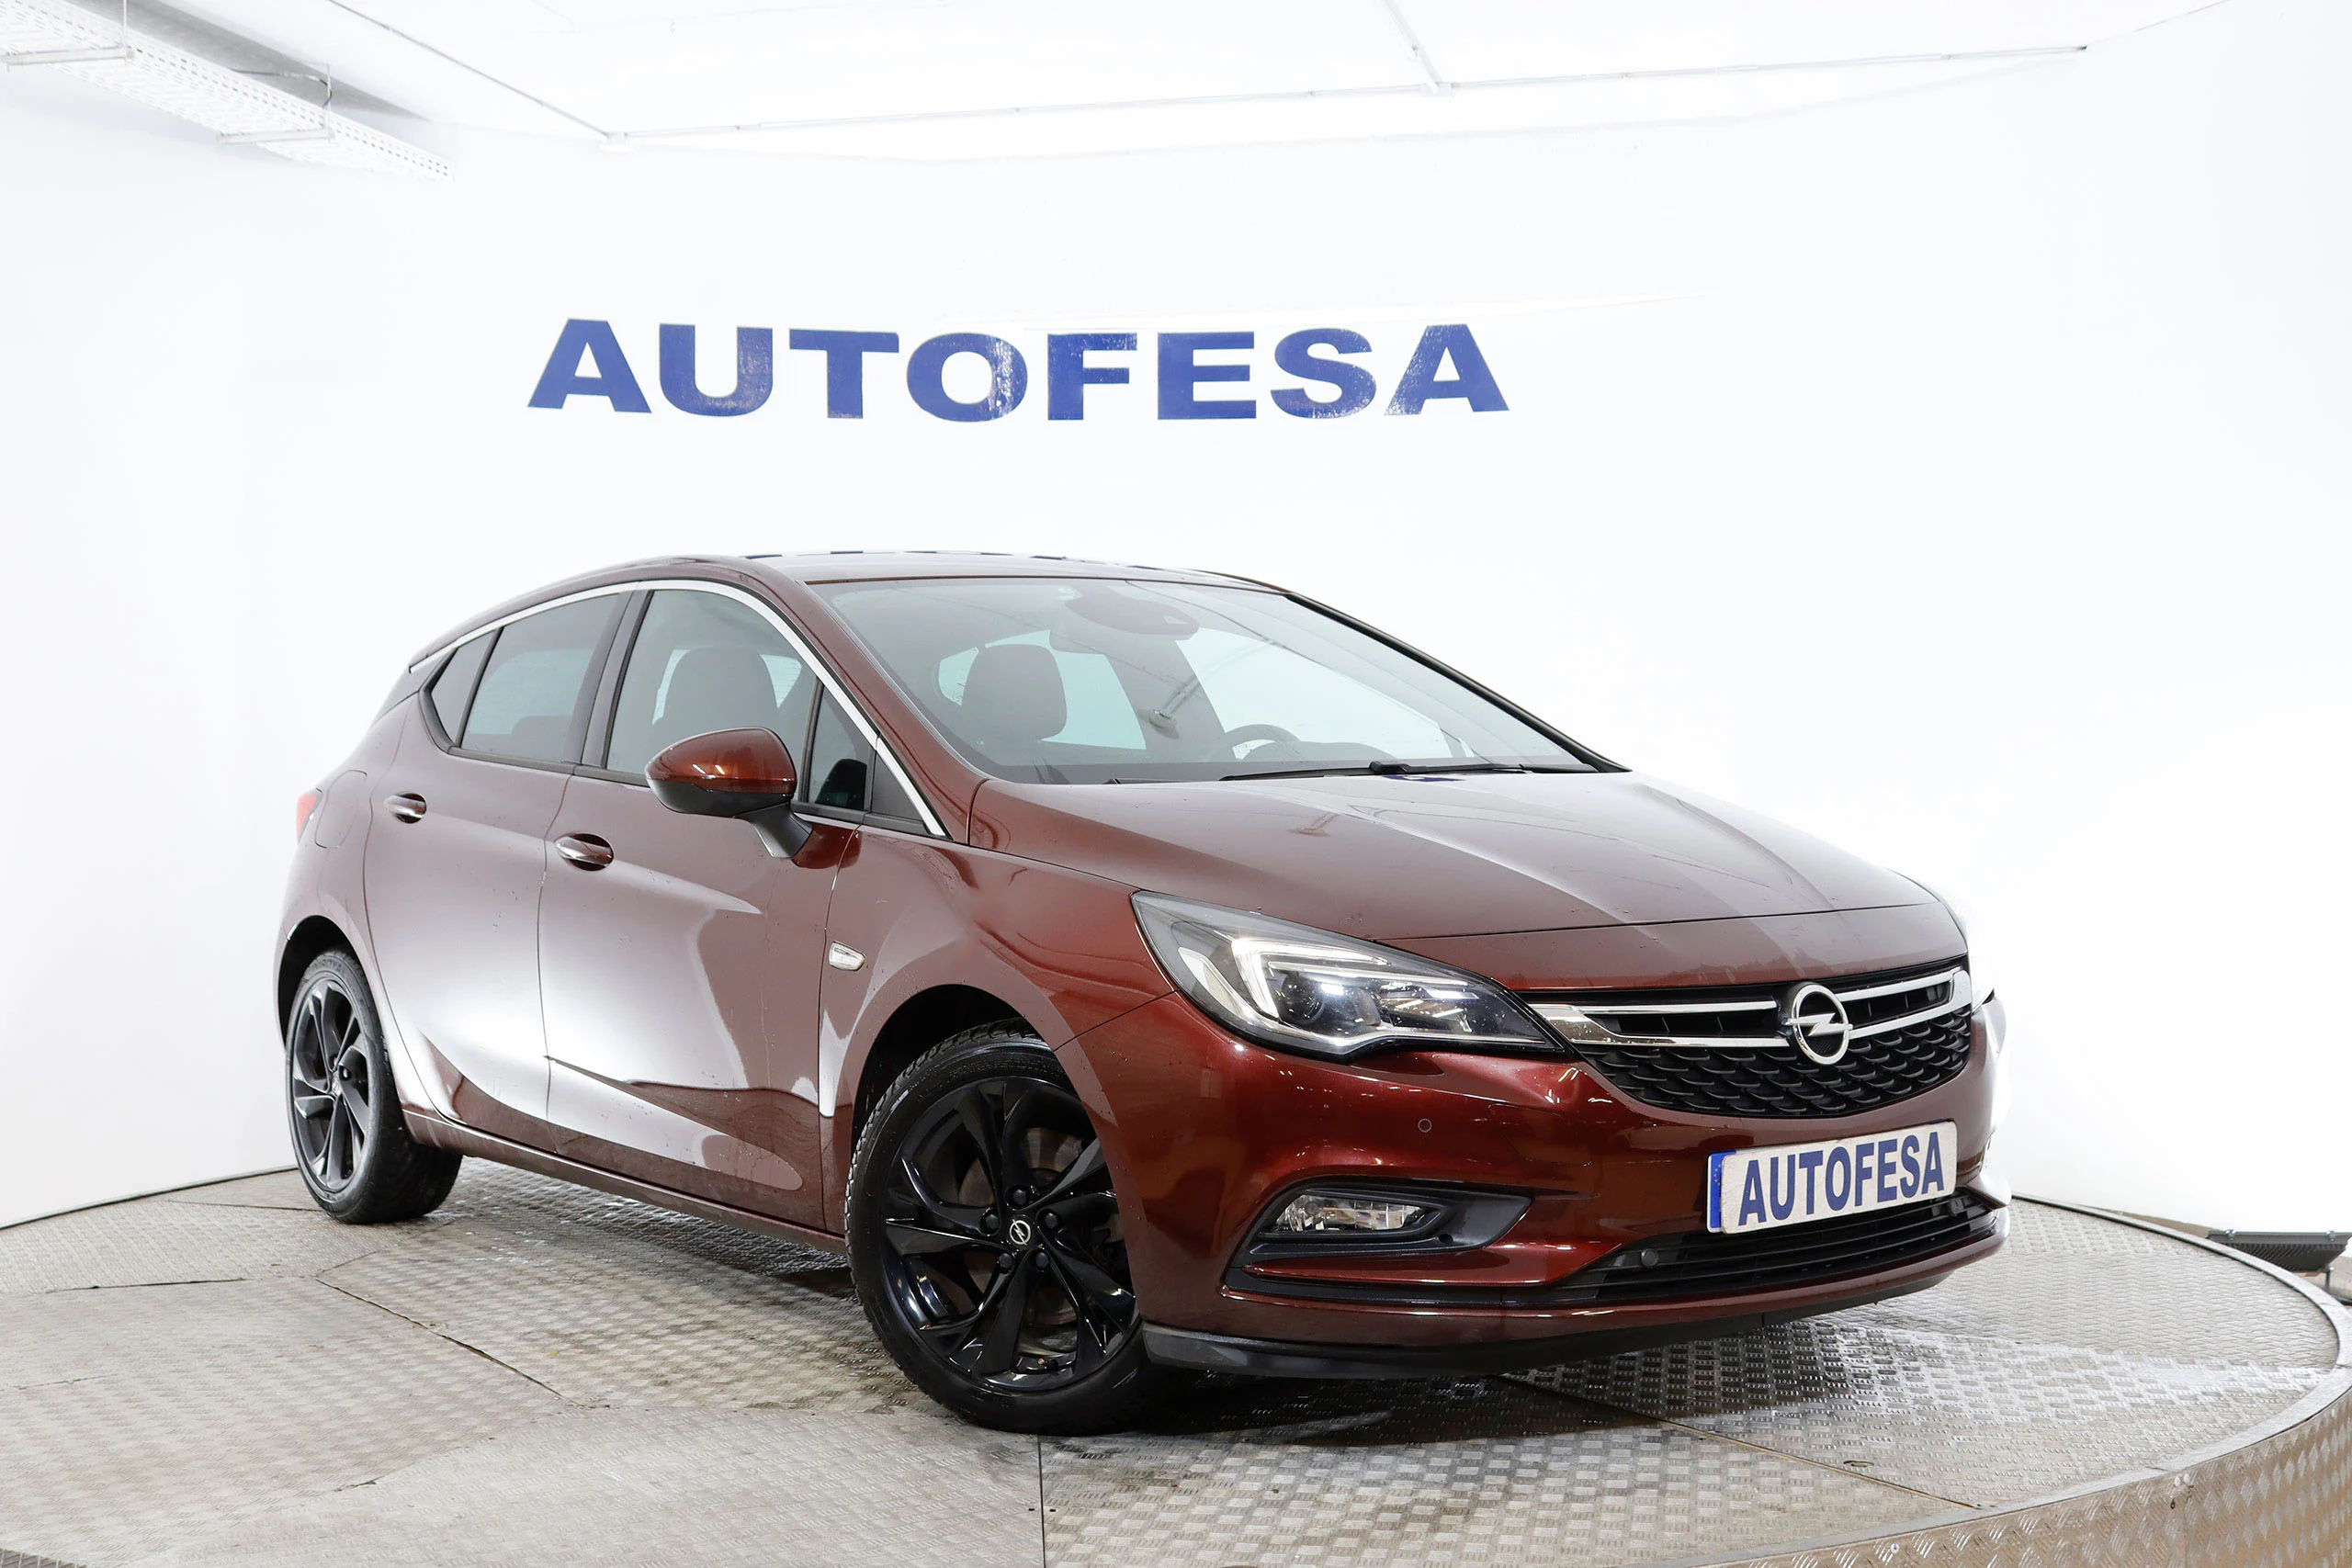 Opel Astra 1.6 CDTI Dynamic 136cv 5P S/S # CUERO - Foto 3